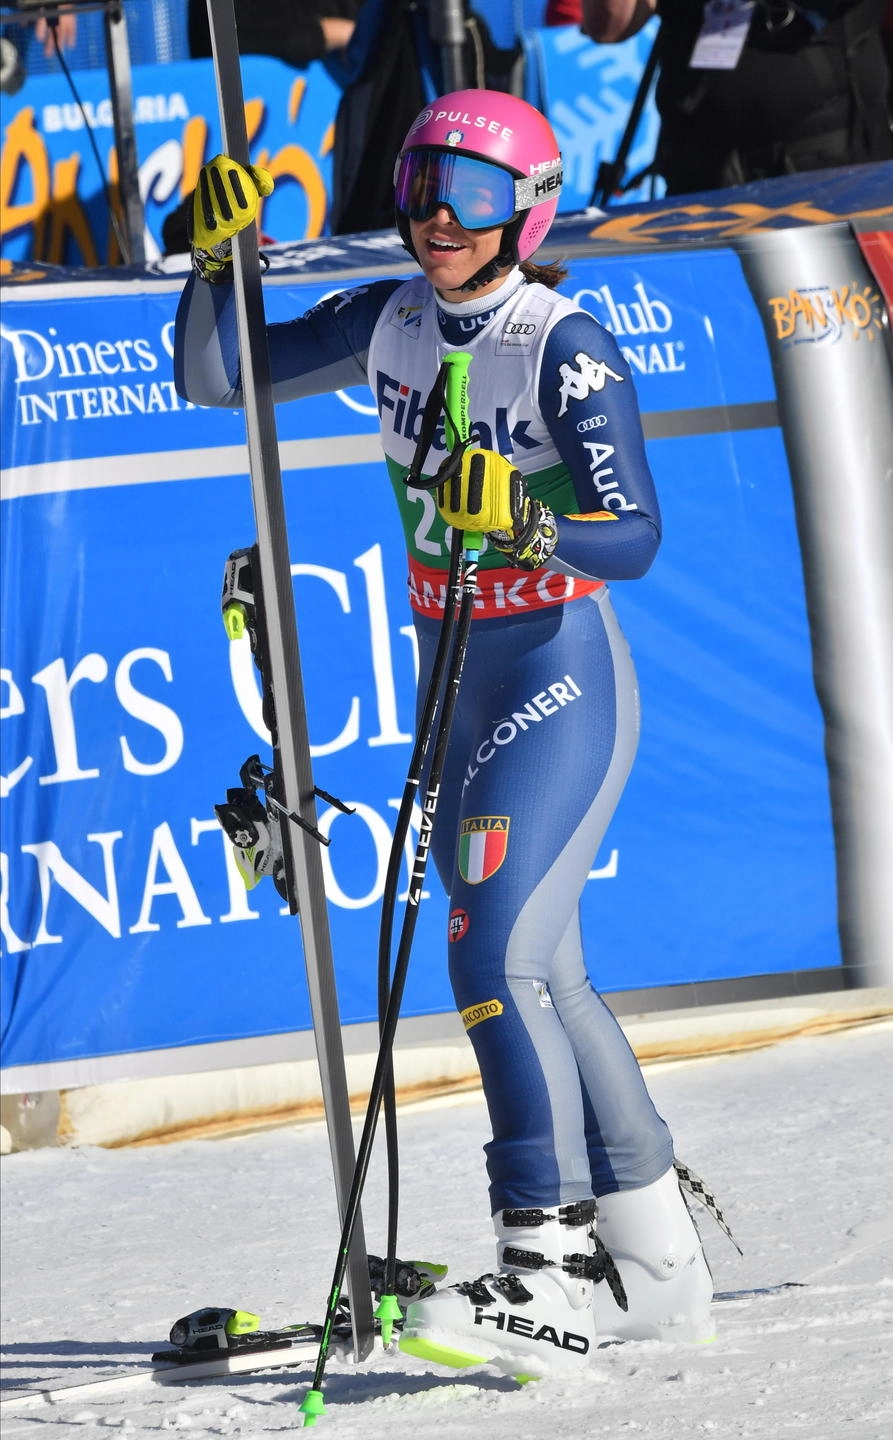 epa08162412 Elena Curtoni of Italy reacts in the finish area during the Women's Downhill race at the FIS Alpine Skiing World Cup in Bansko, Bulgaria on 25 January 2020.  EPA/GEORGI LICOVSKI